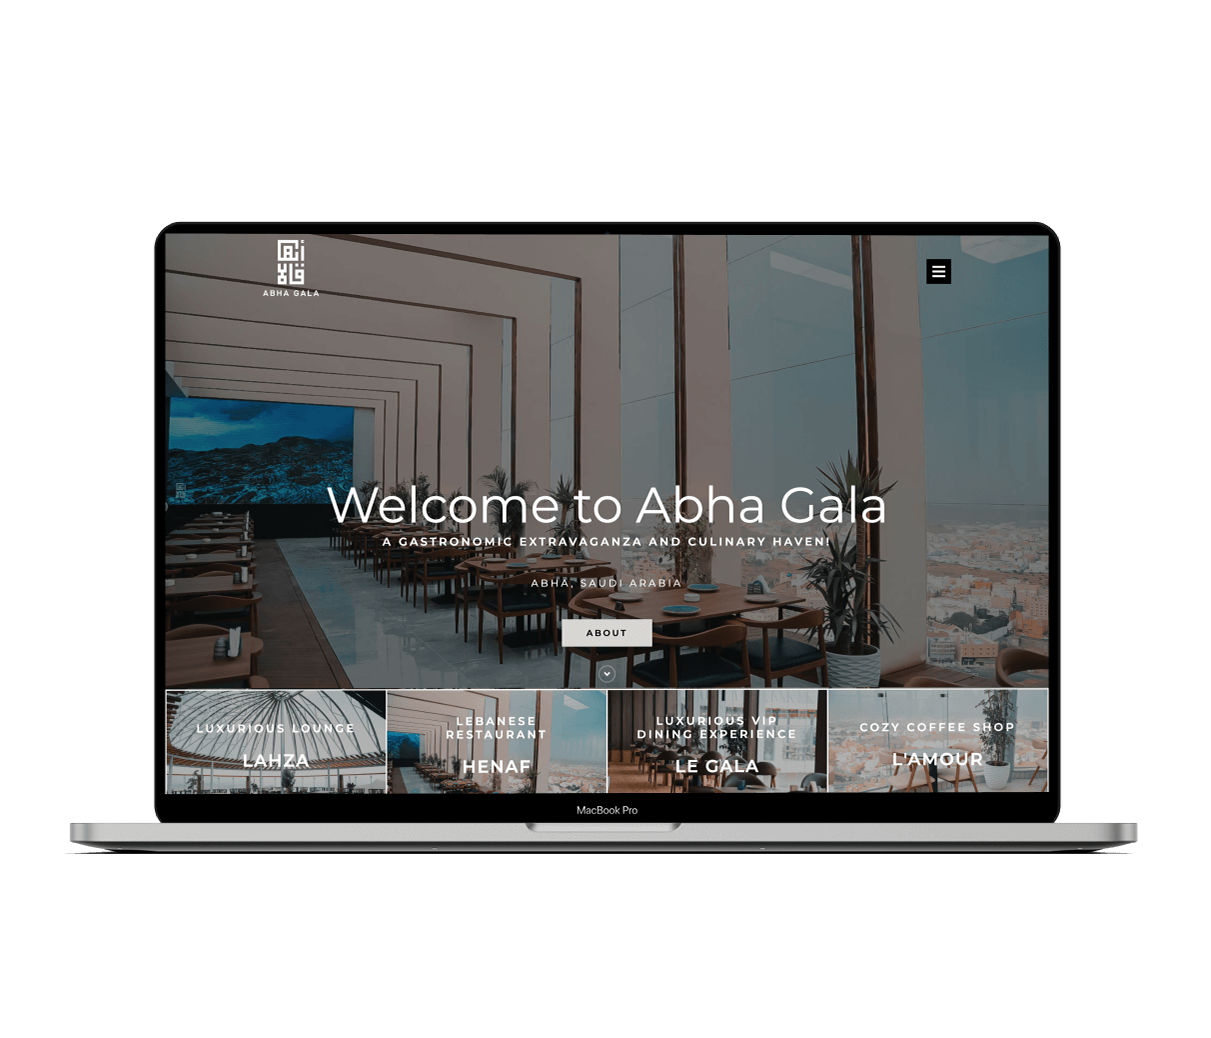 Abhagala website developed for Odindigital by Christelle Haddad